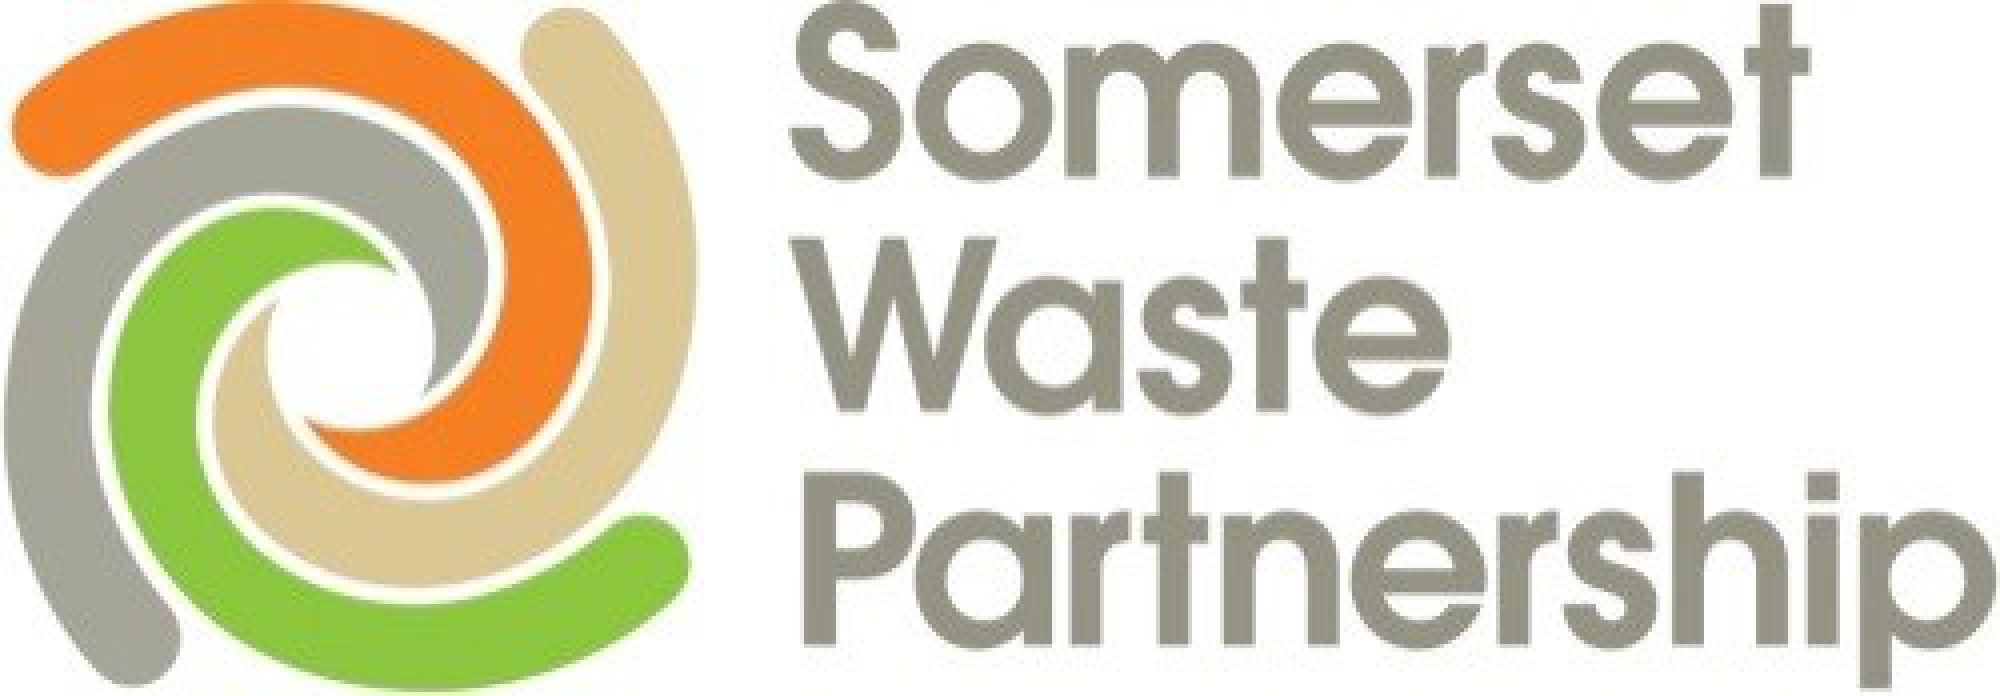 Somerset Waste Partnership round up